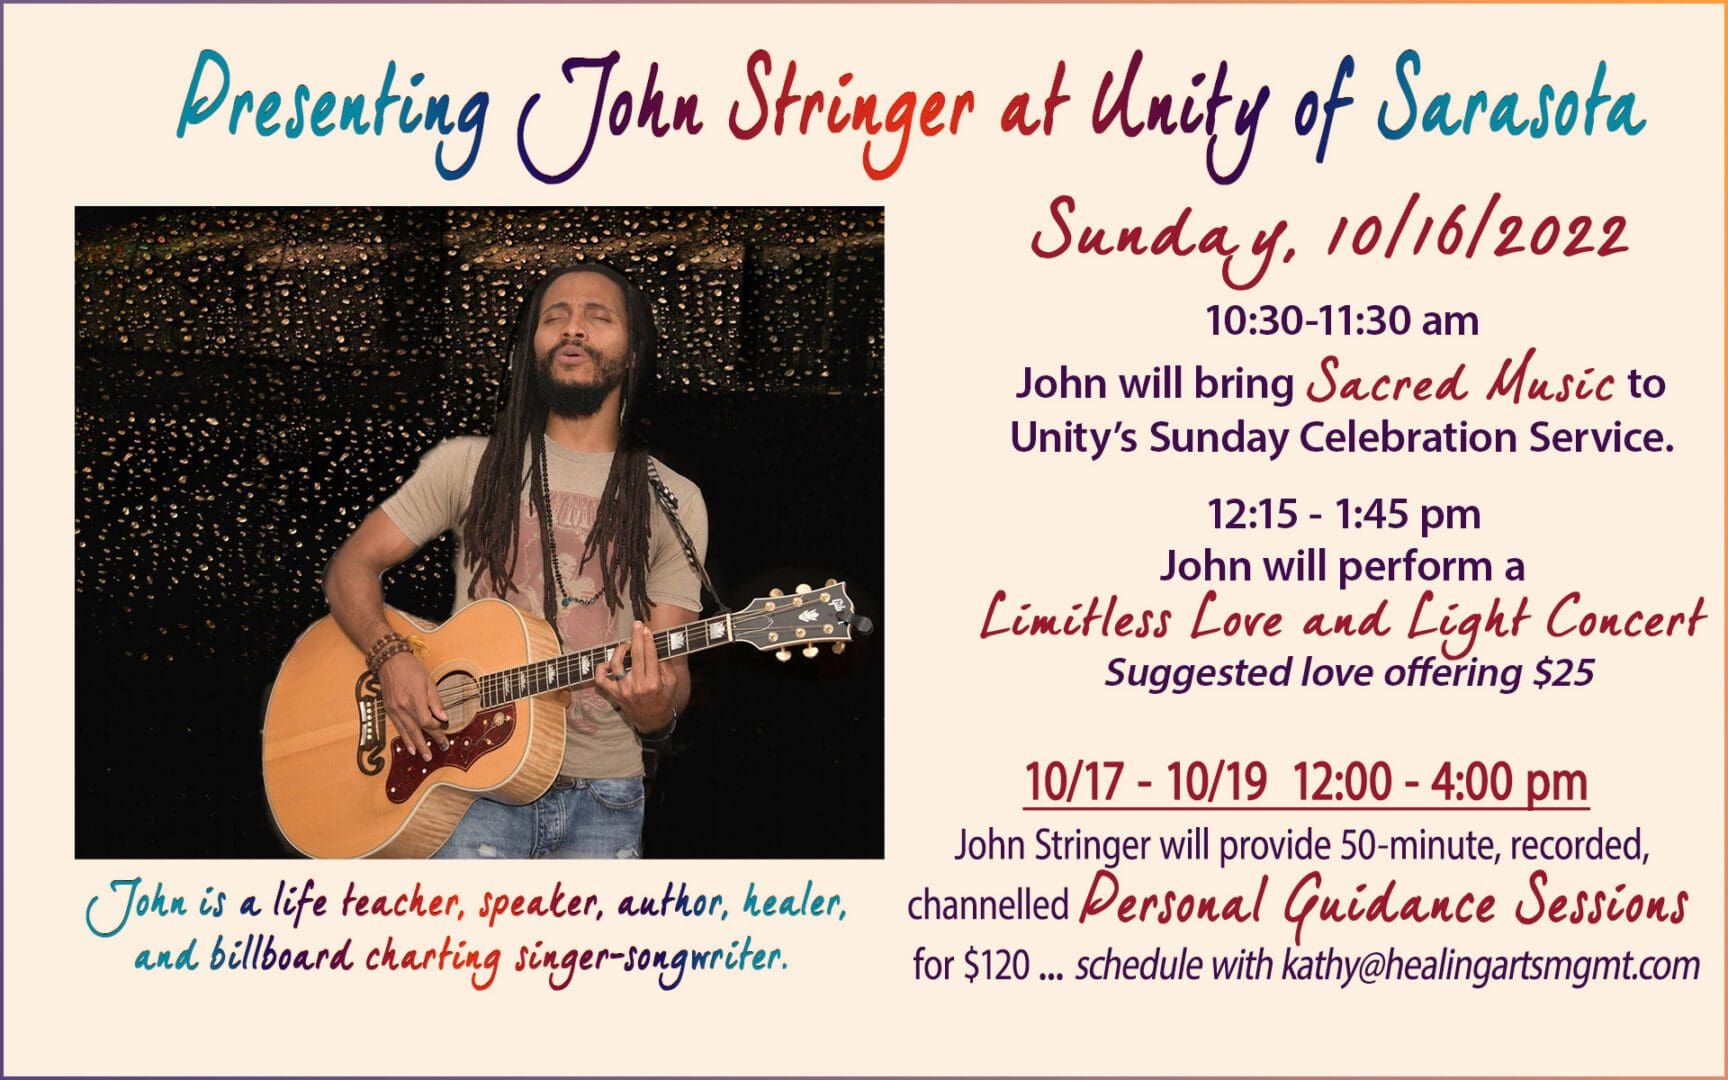 John Stringer will bring Sacred Music to Unity’s Sunday Celebration Service.